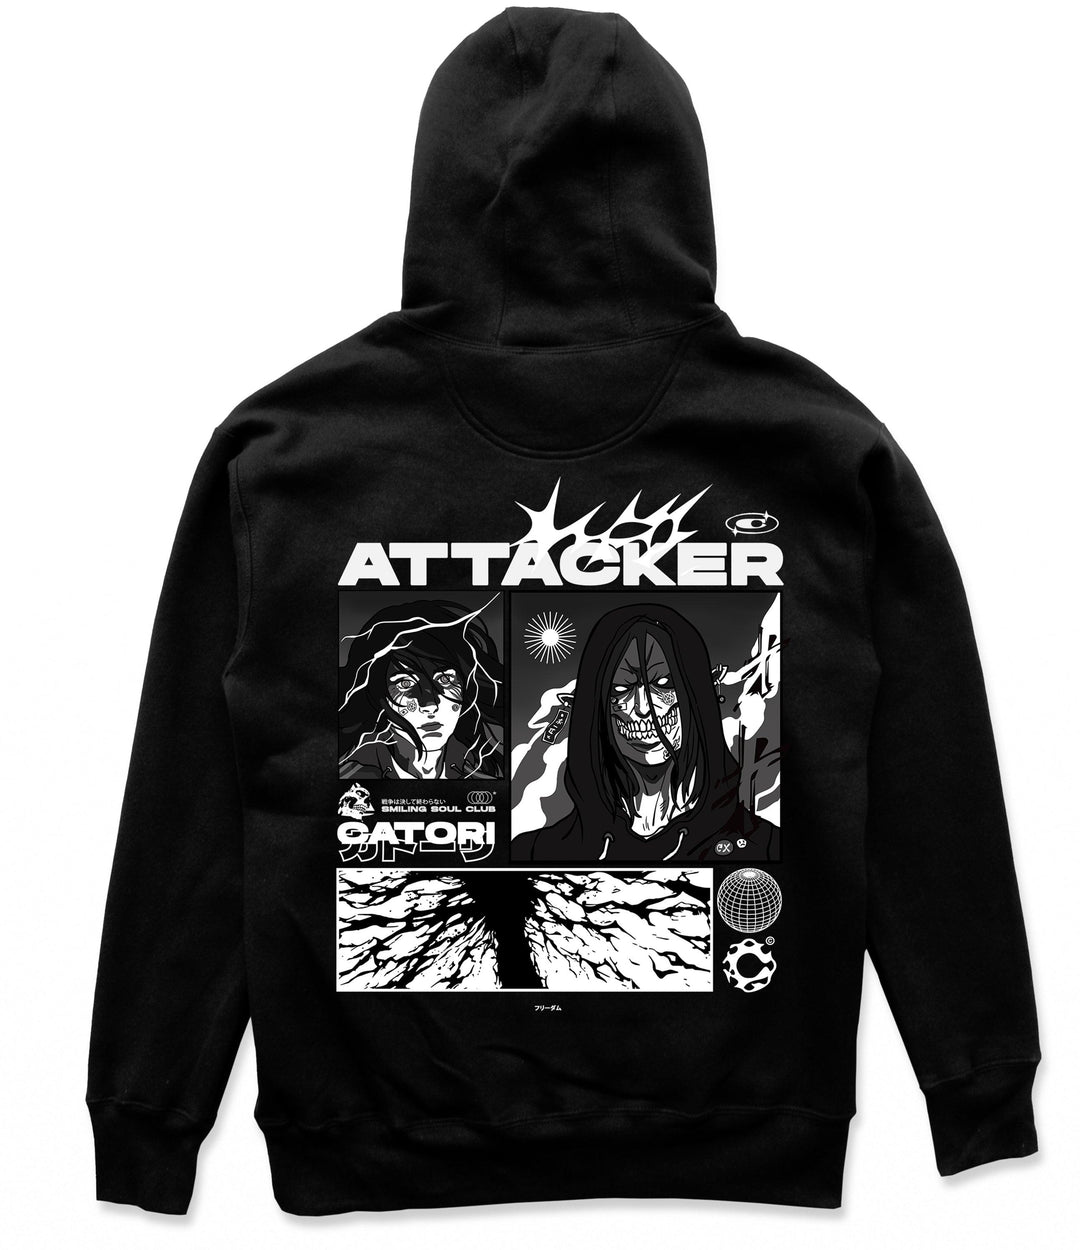 Attacker Hoodie at Catori Clothing | Graphic & Anime Tees, Hoodies & Sweatshirts 